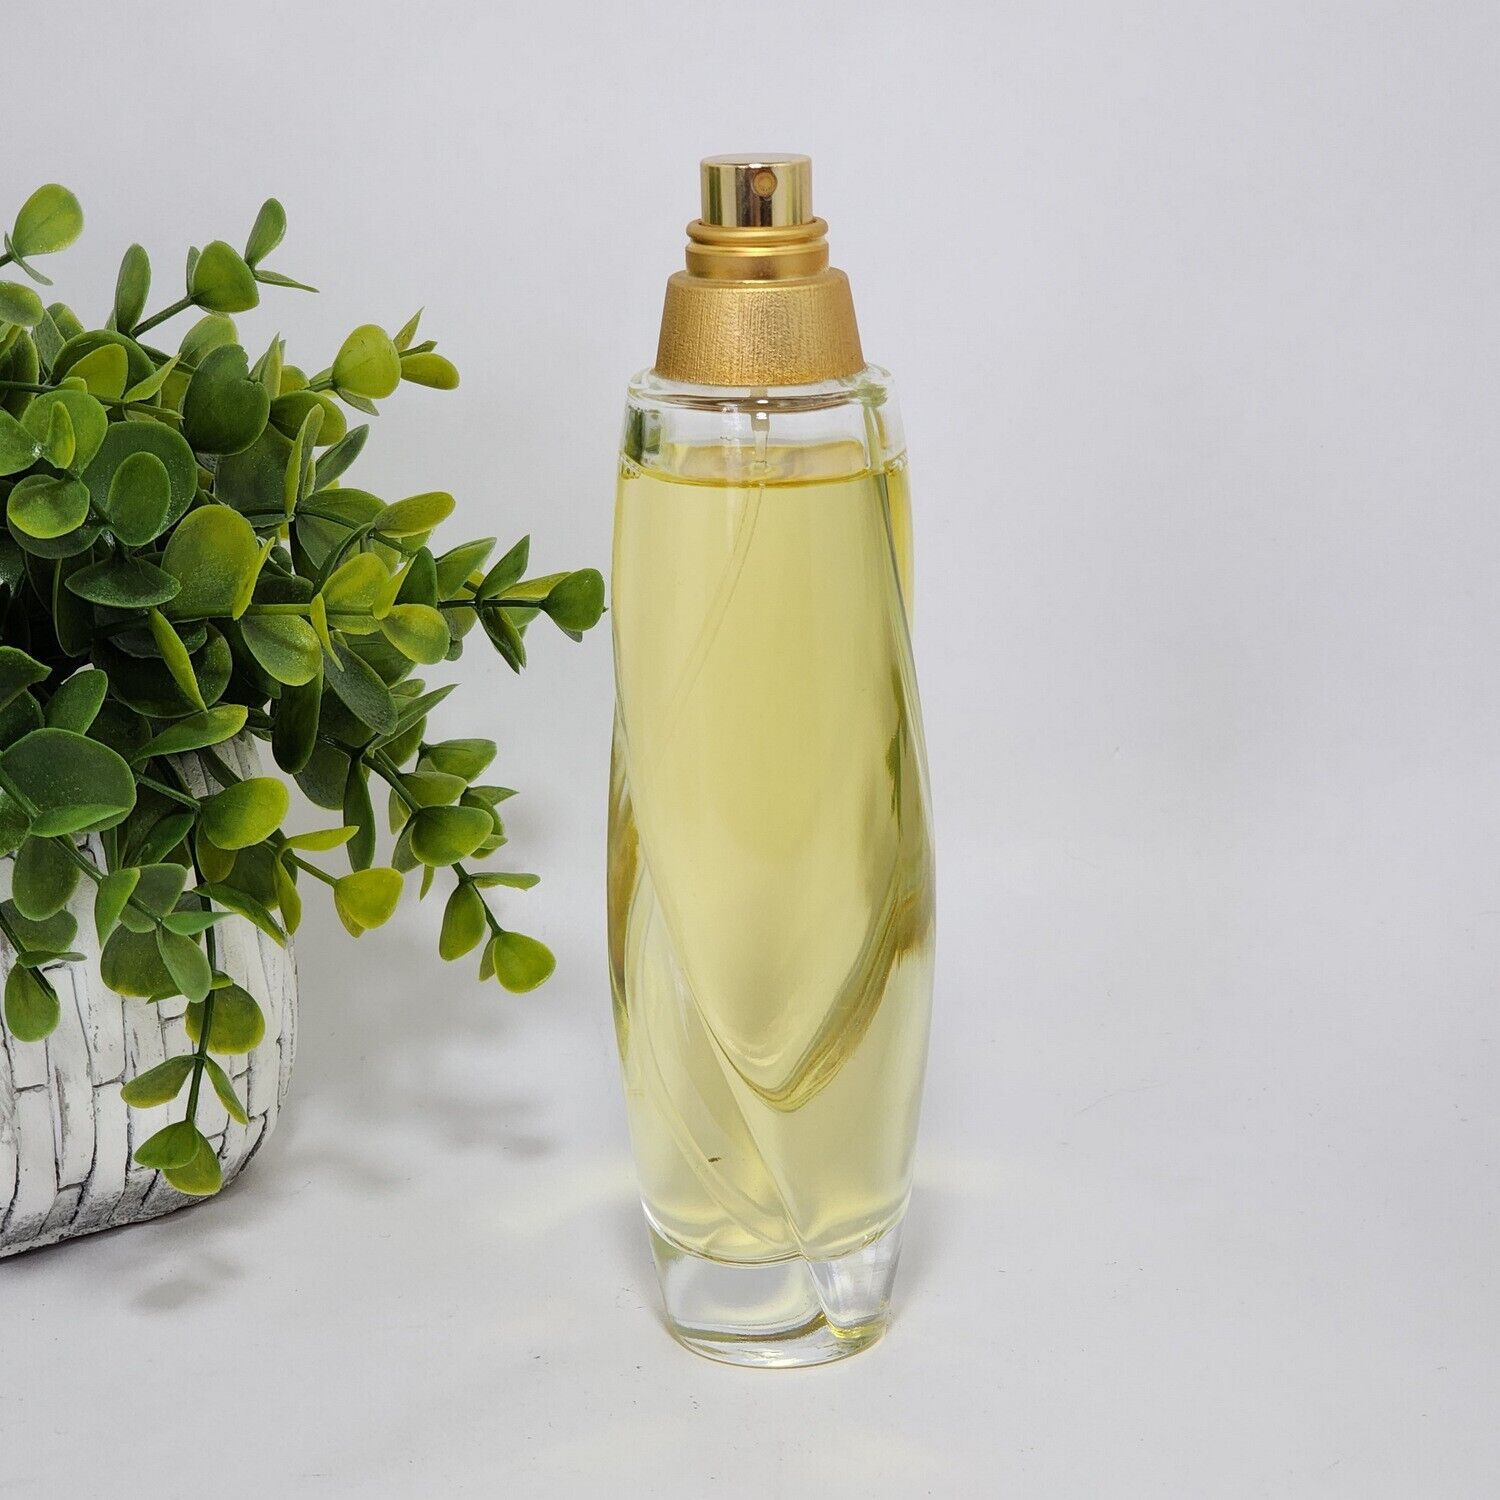 Escada Acte 2 Eau de Parfum Spray Perfume for Women 3.4 fl oz / 100 ml